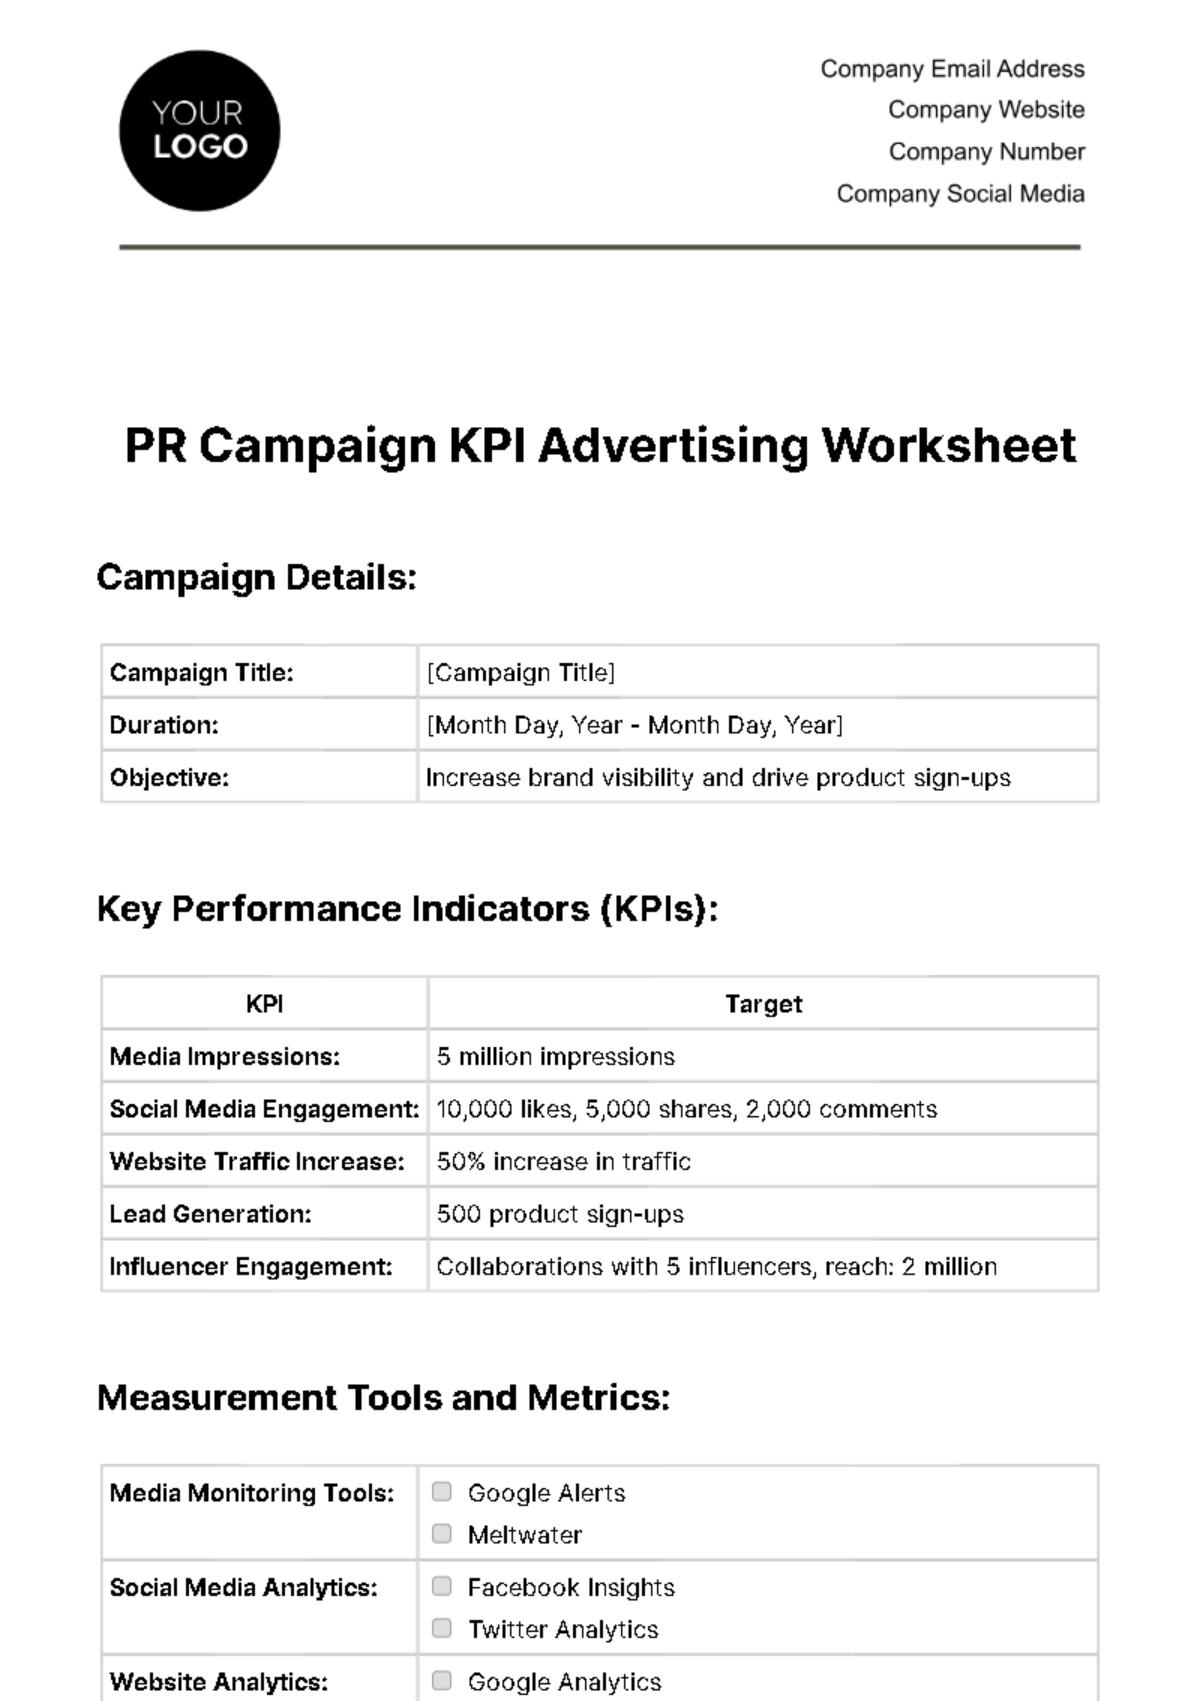 PR Campaign KPI Advertising Worksheet Template